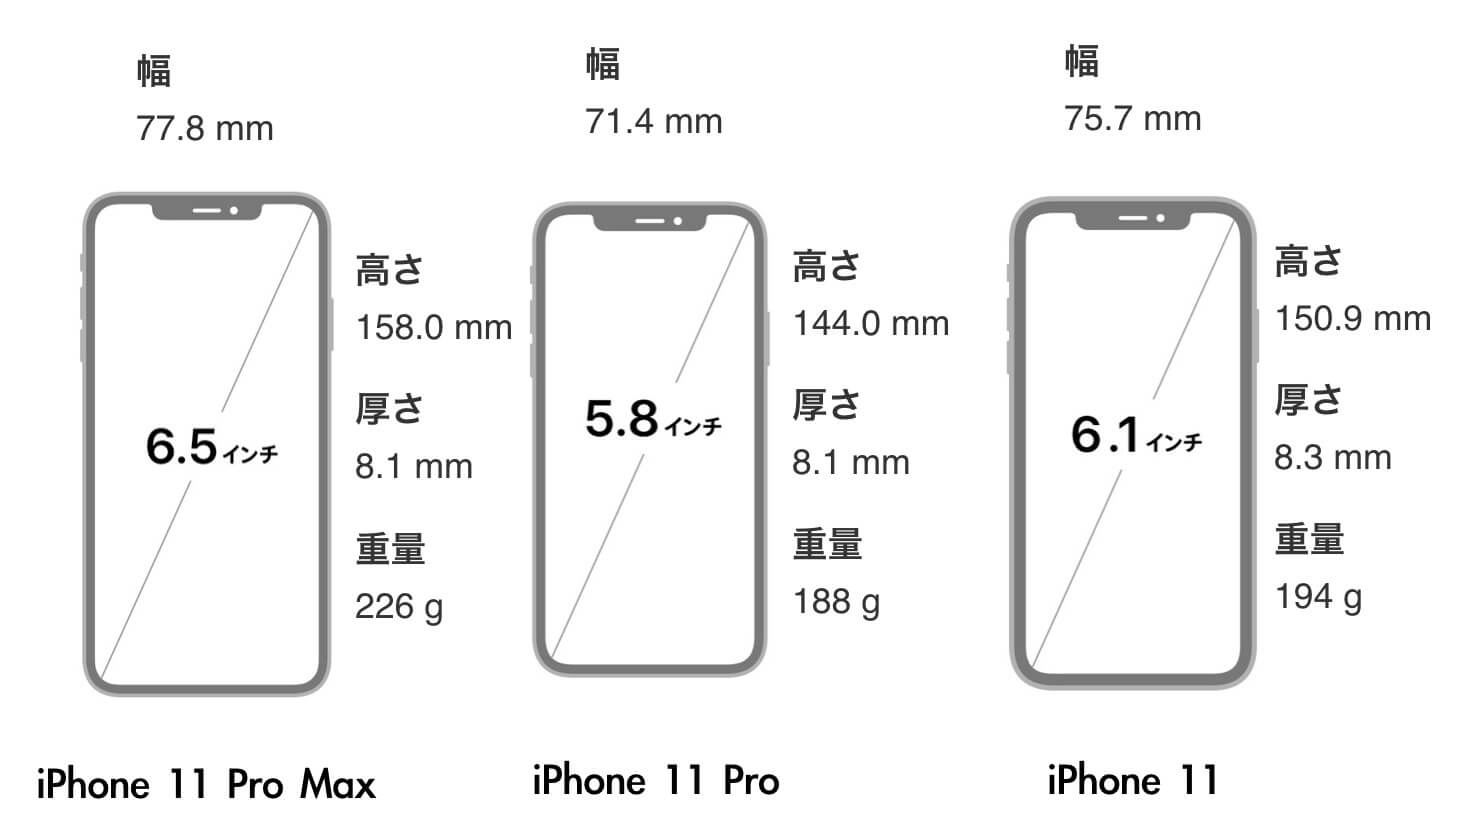 Iphone 11 Pro Max размер дисплея. Iphone 11 Pro размер в дюймах. Айфон 11 размер экрана в сантиметрах. Айфон 11 габариты диагональ. Размер телефона в дюймах